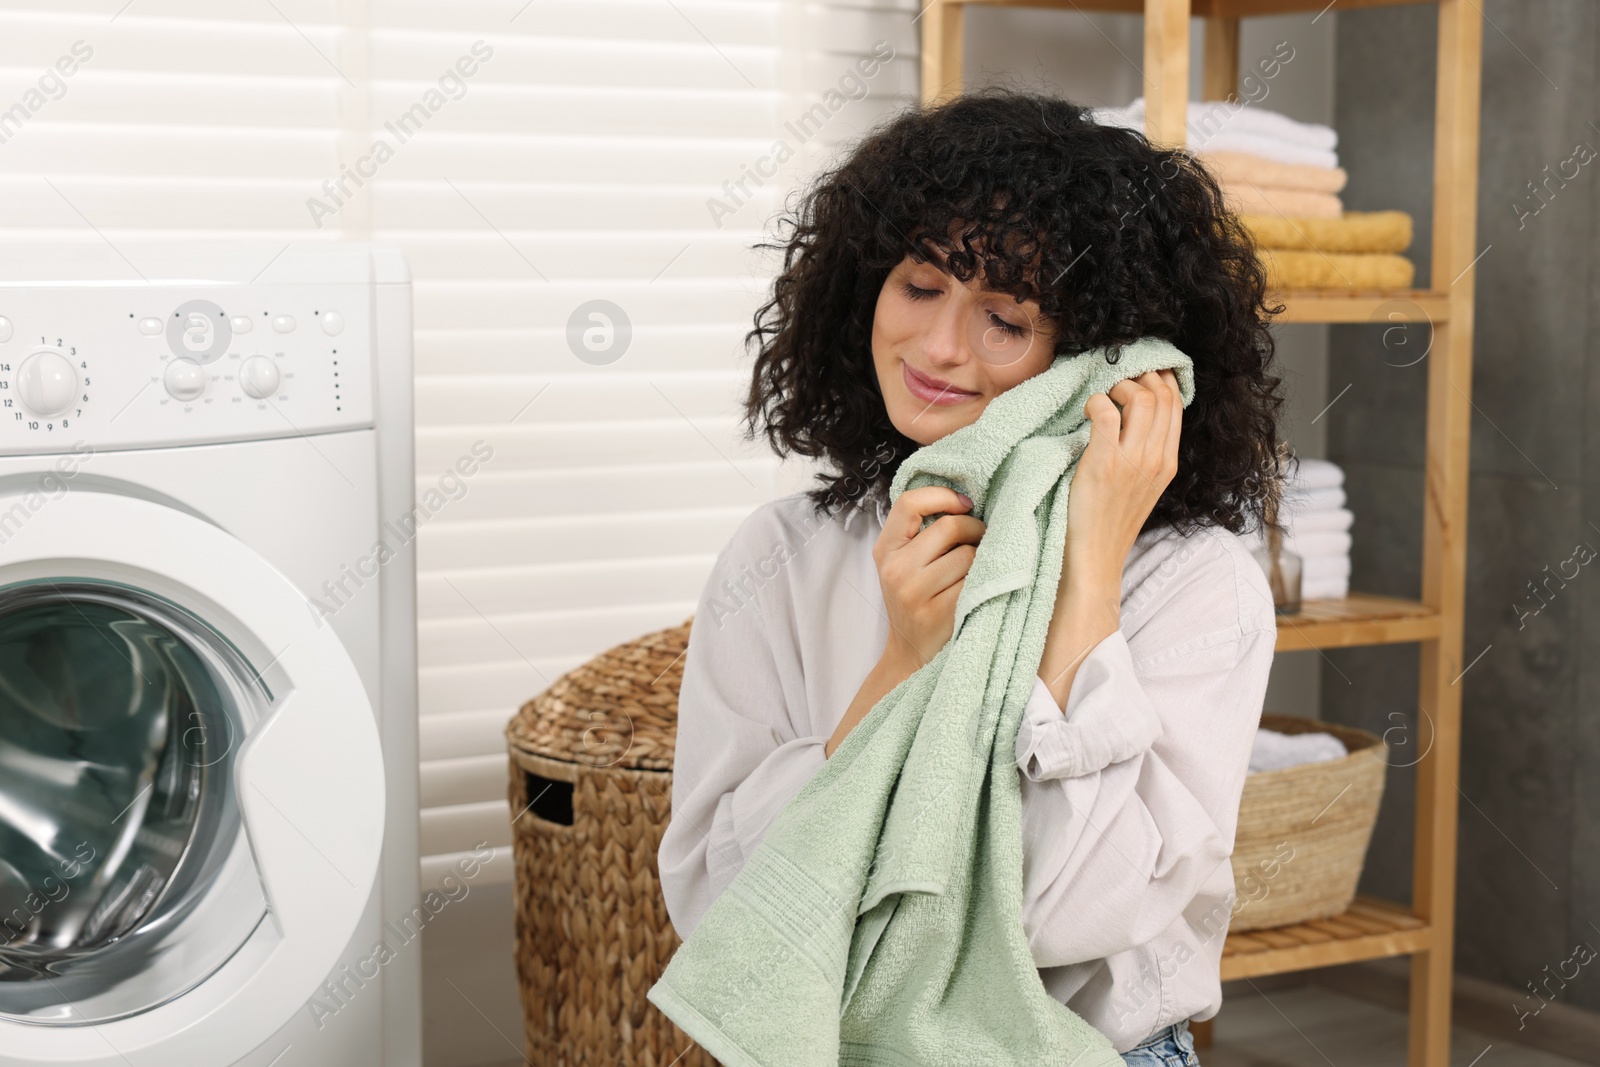 Photo of Woman with laundry near washing machine indoors